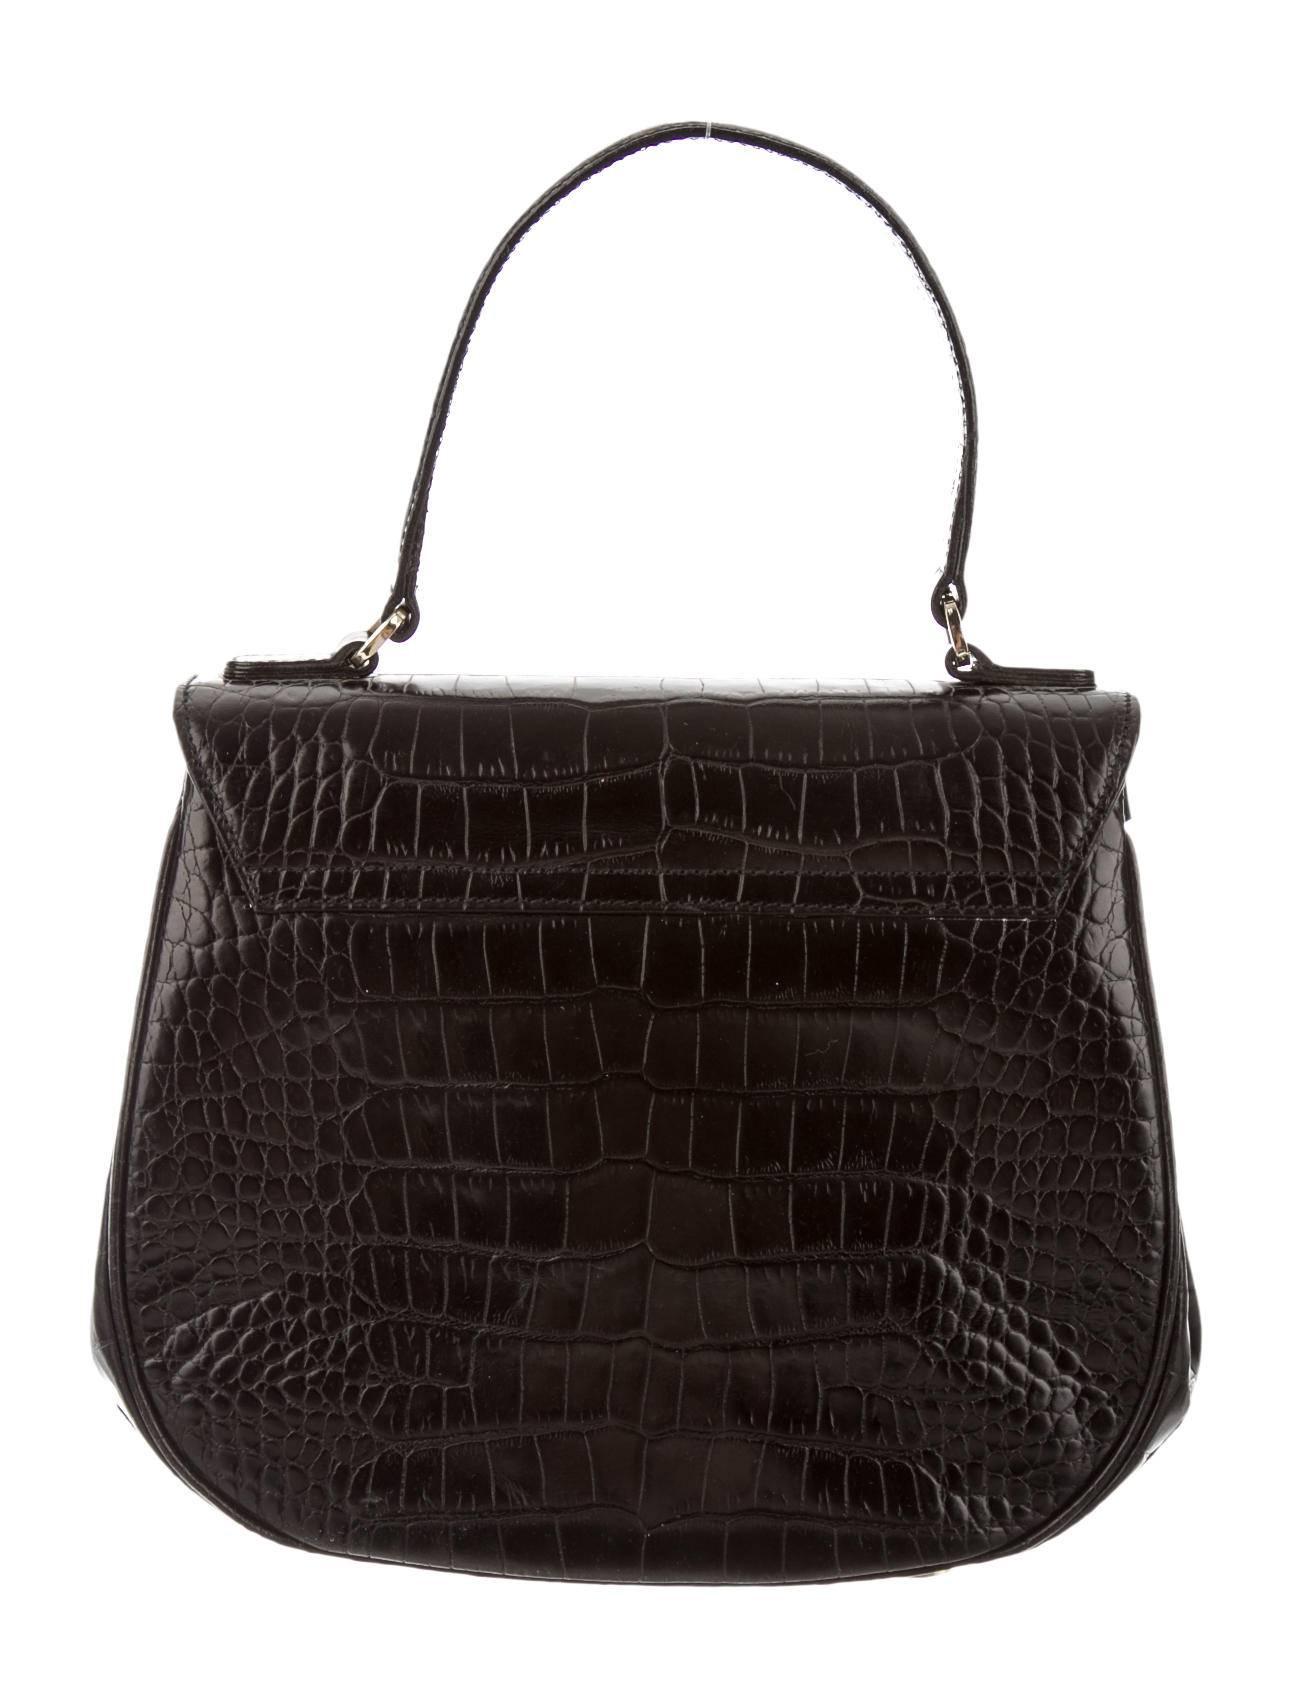 Women's Oscar de la Renta Rare Black Alligator Leather Top Handle Flap Satchel Bag